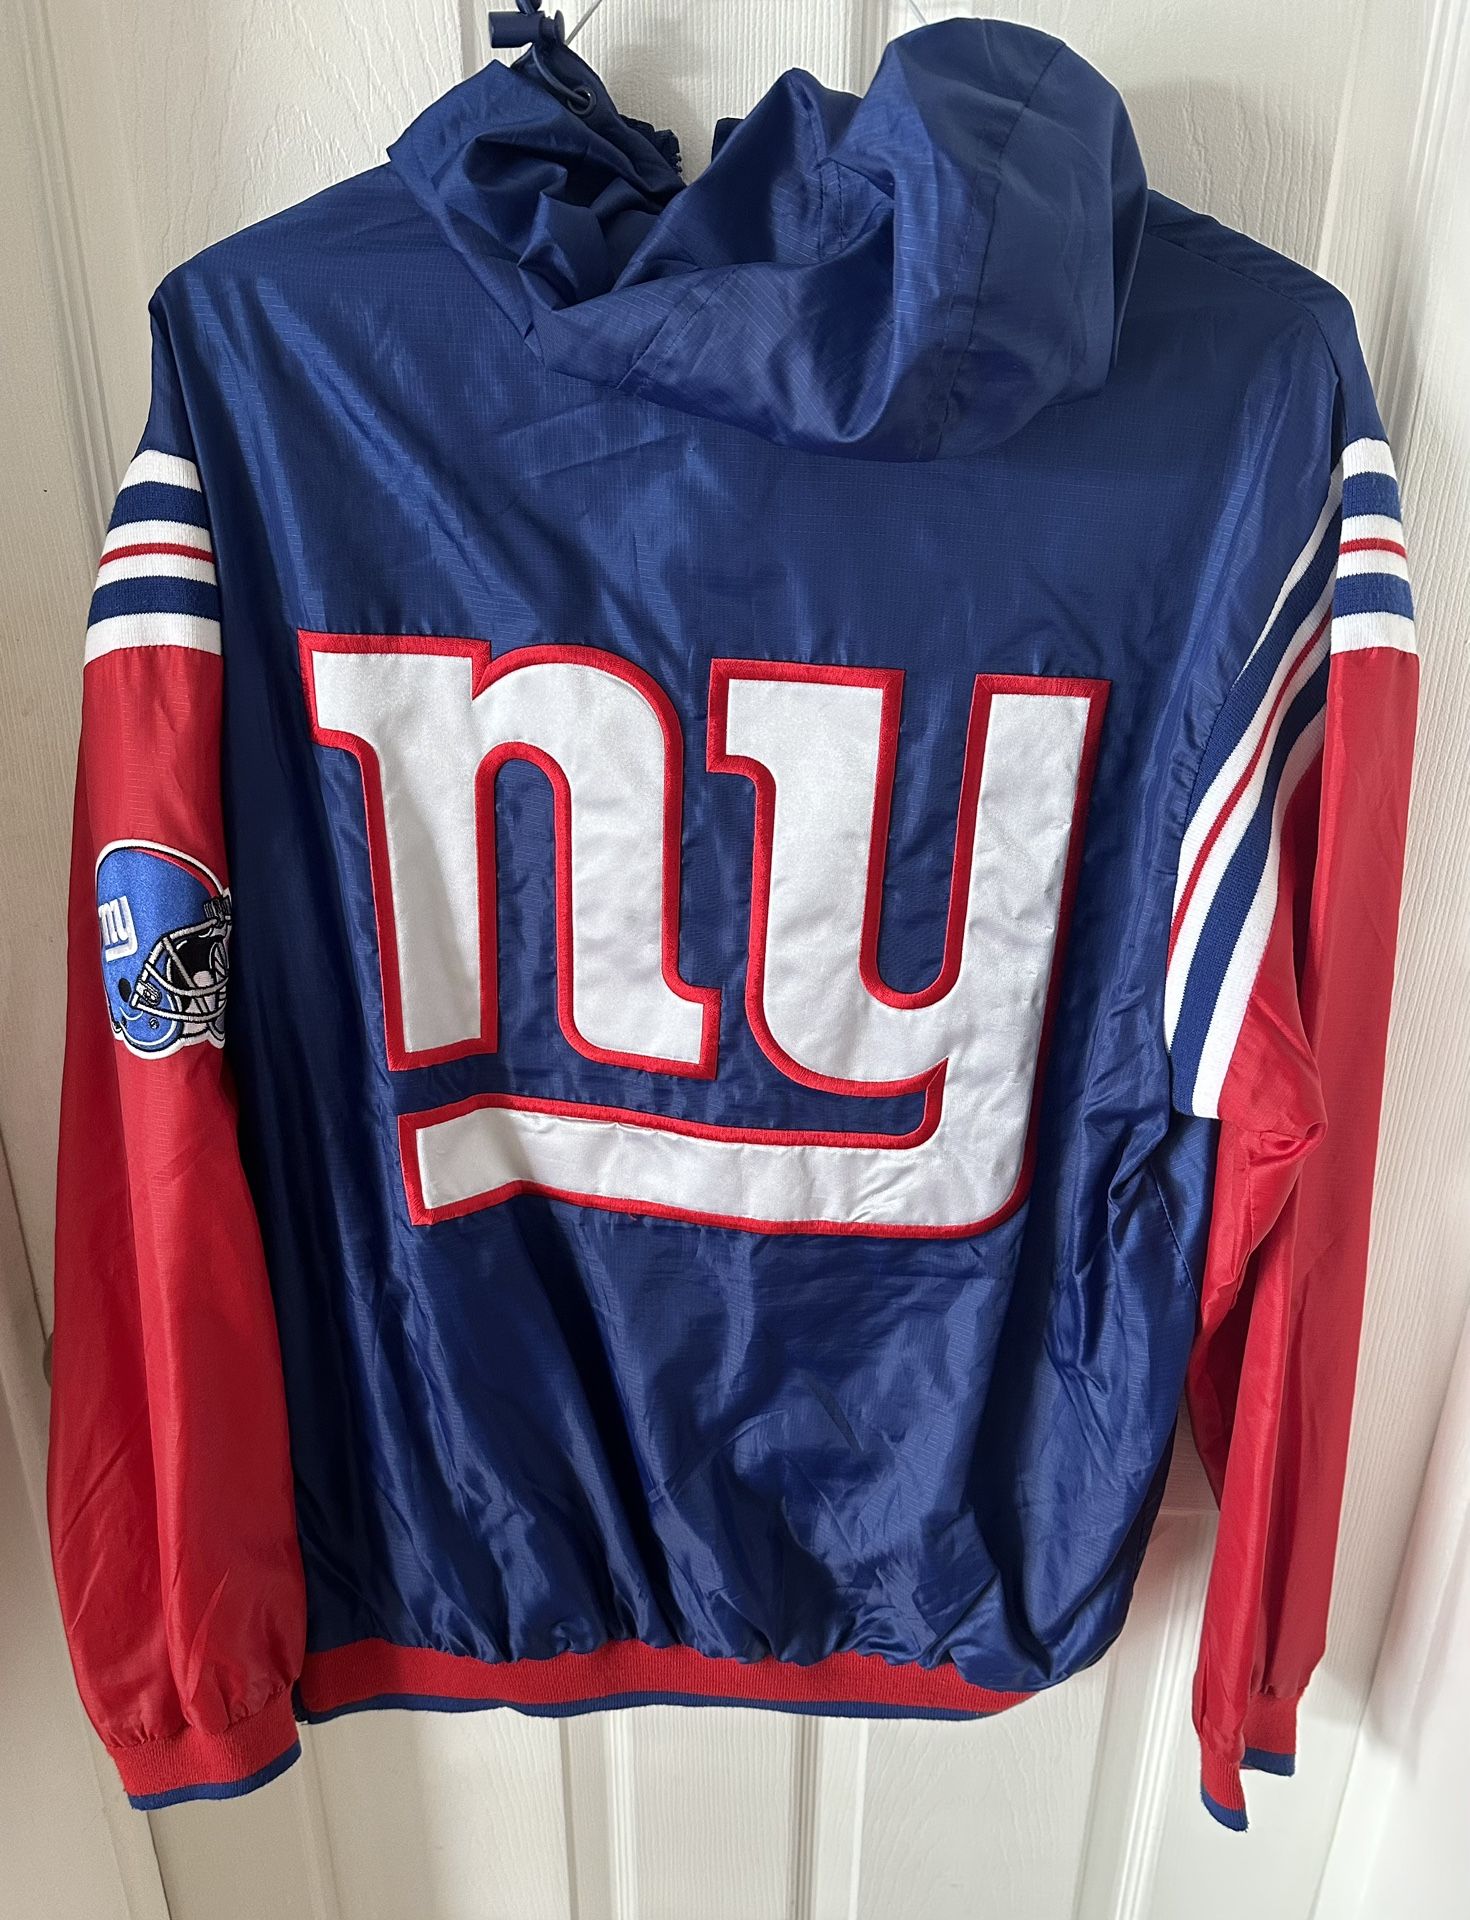 Vintage 90s G-lll New York Giants Jacket